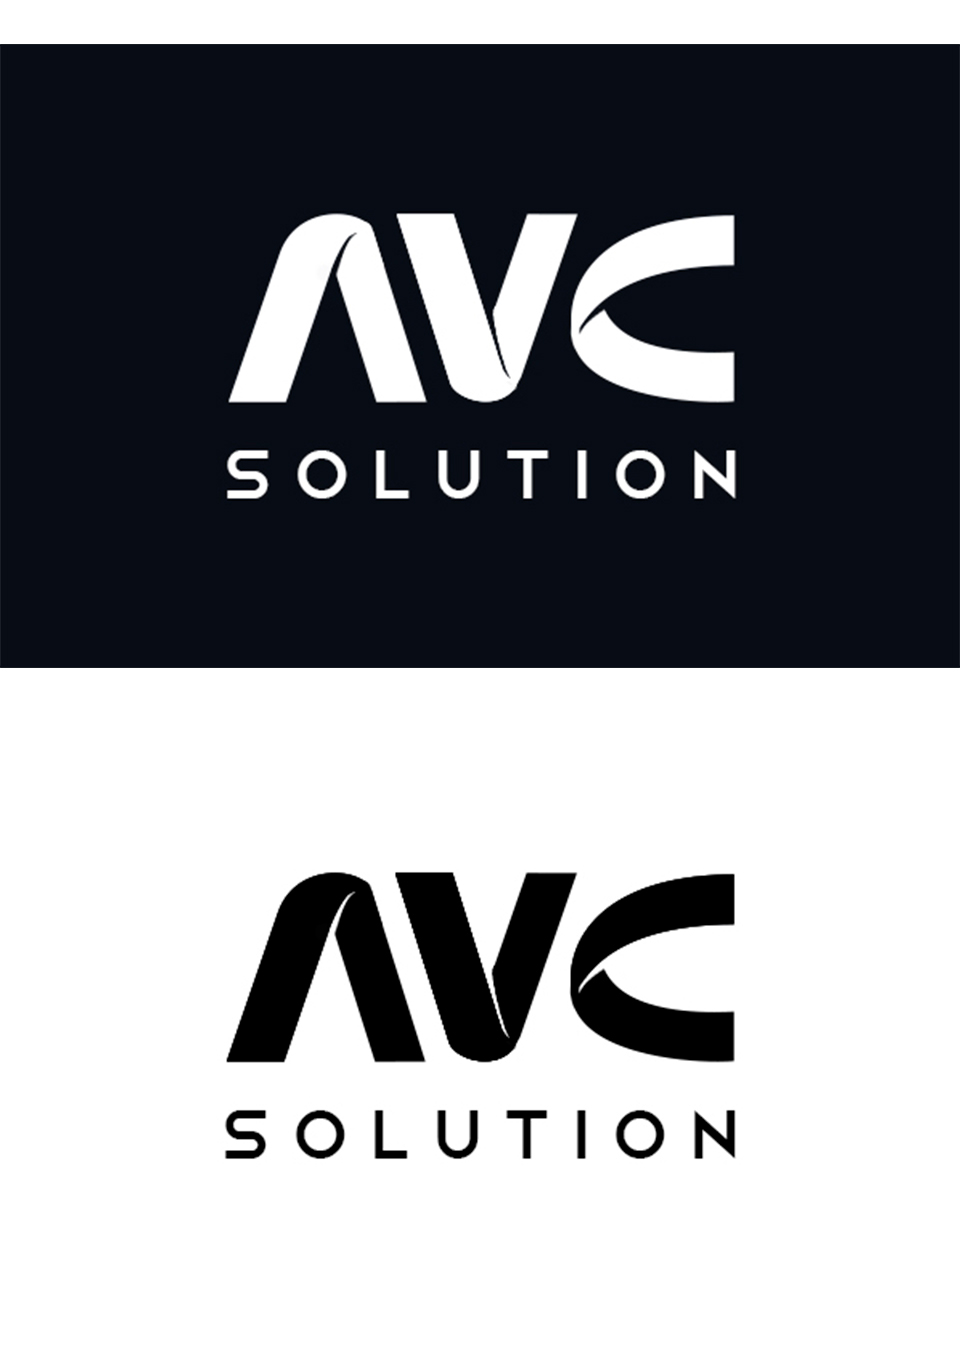 avc Solution audiovisual video technician video installation